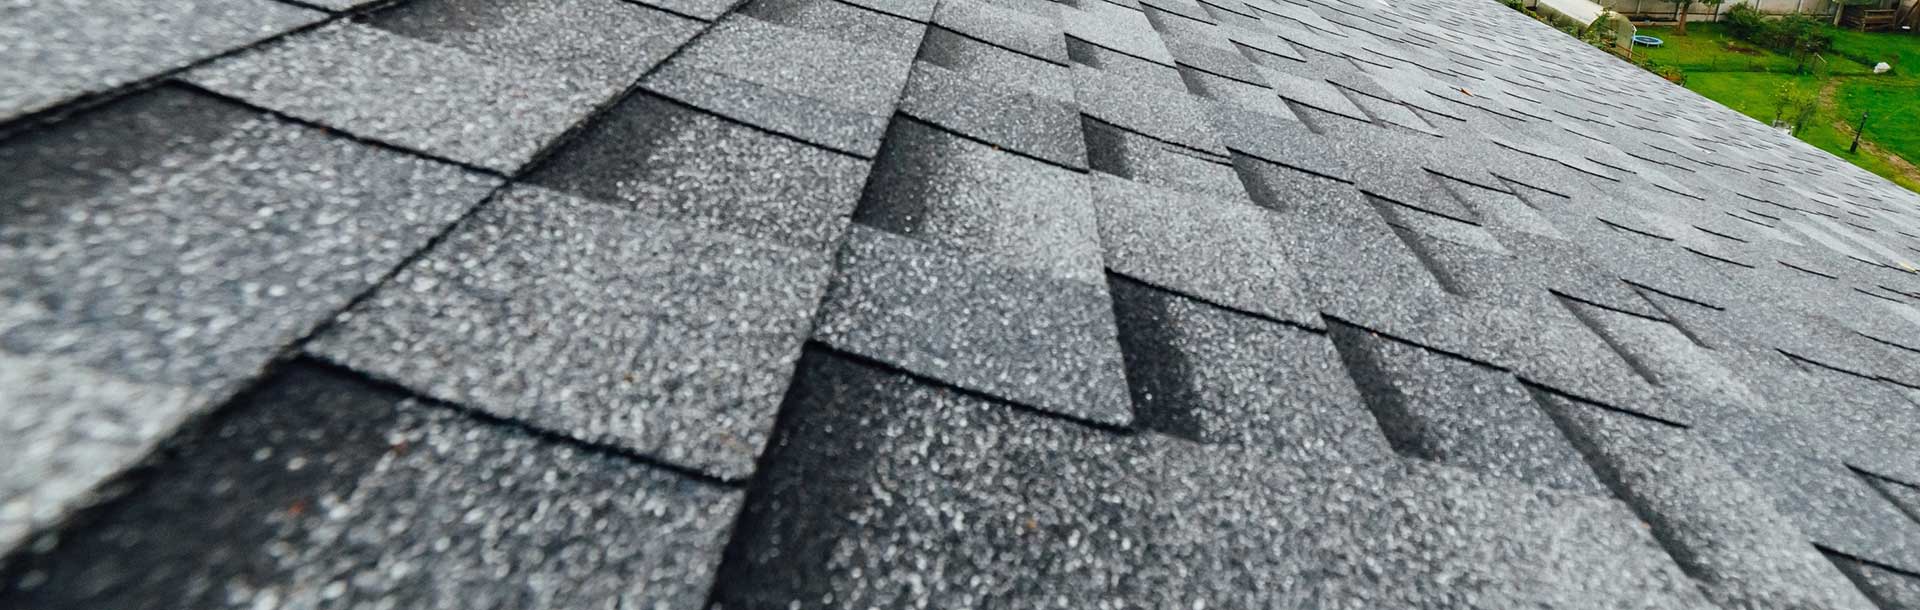 Black grey roof shingles